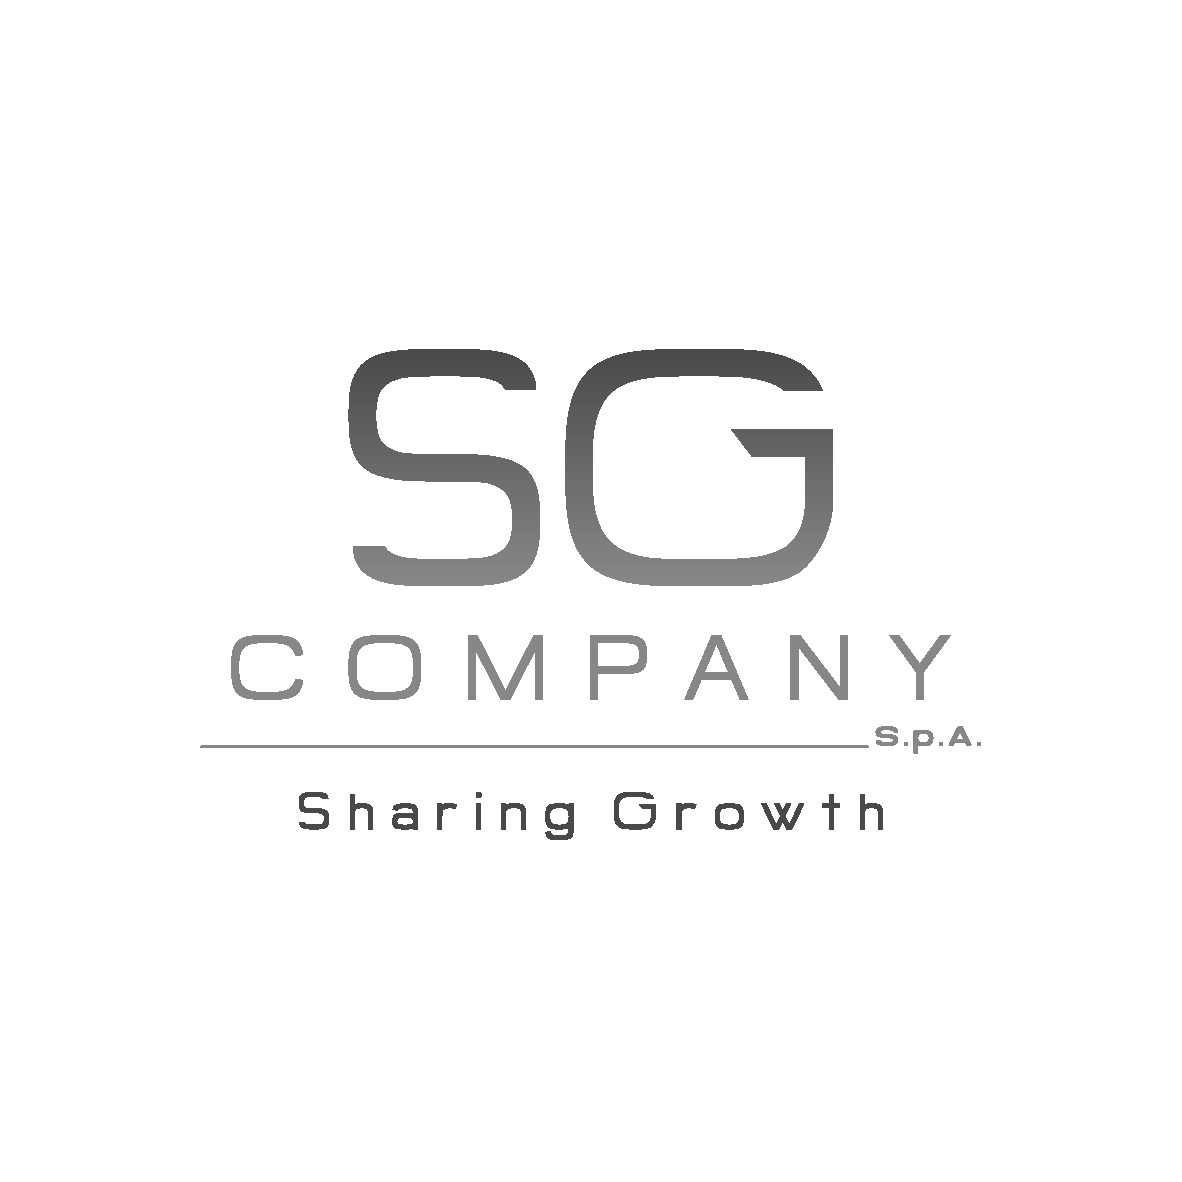 SG Company